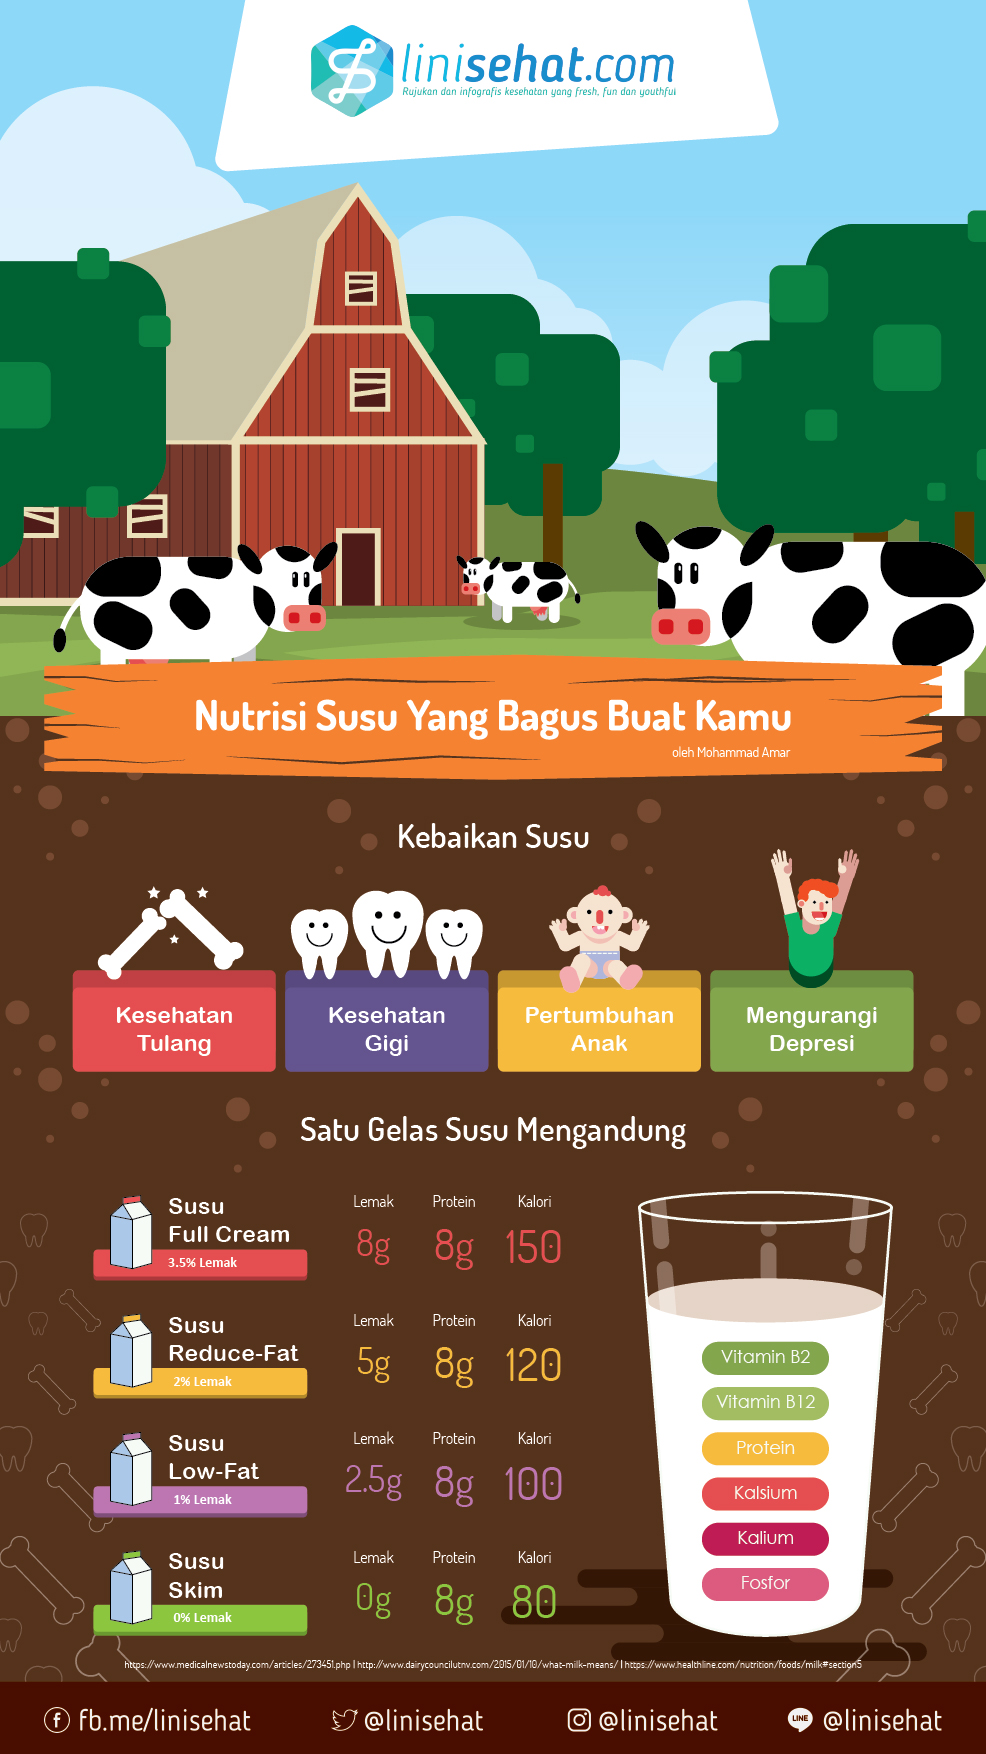 i_23 agustus_infografis_mohammad amar shidiq_nutrisi susu yang bagus buat kamu